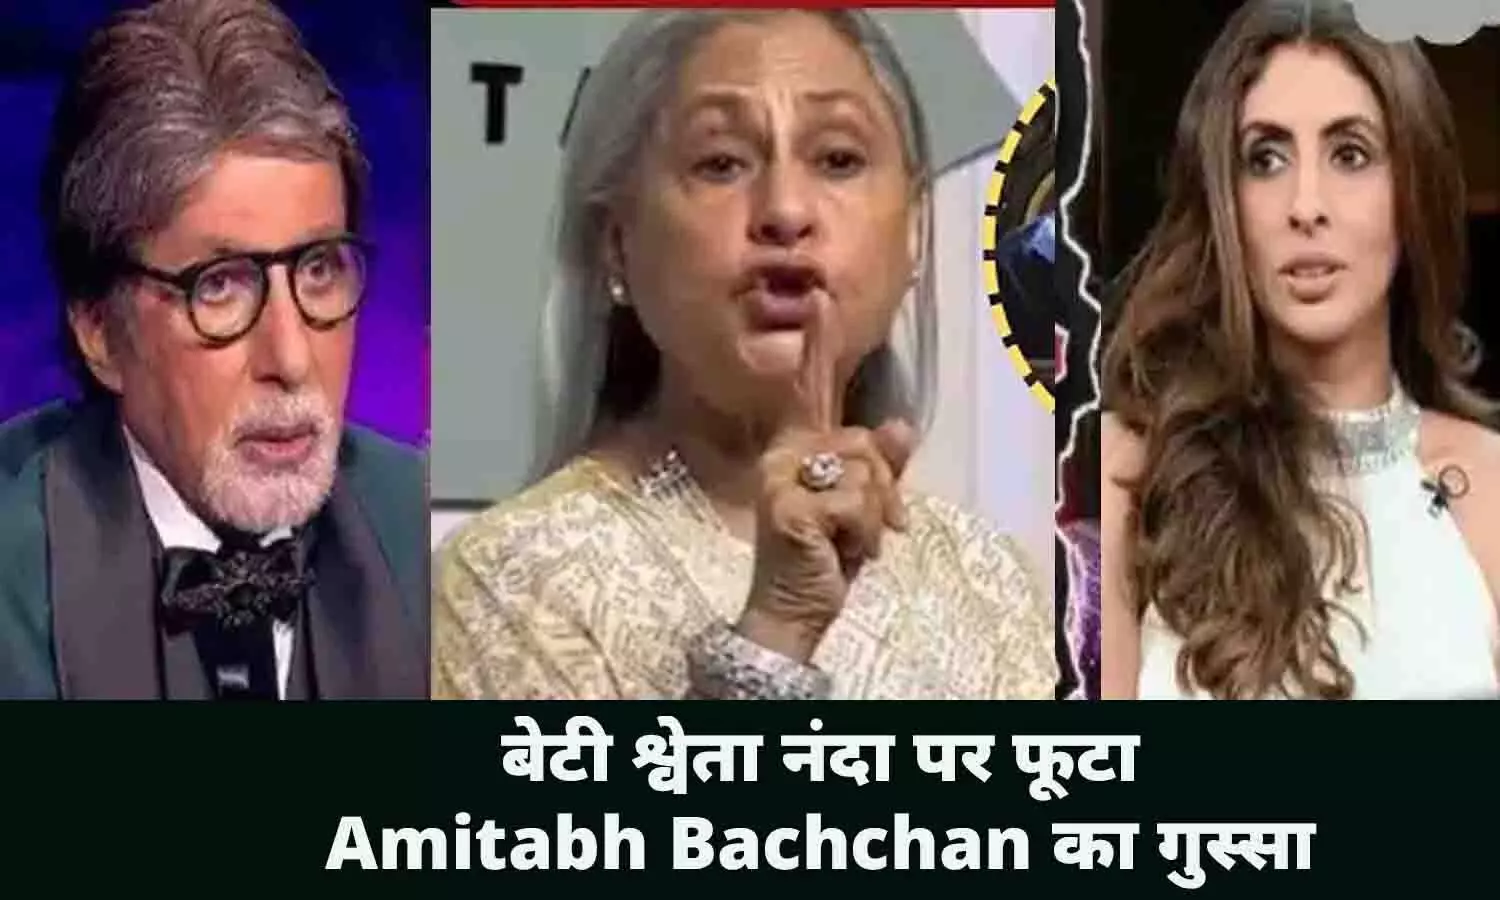 बेटी श्वेता नंदा पर फूटा Amitabh Bachchan का गुस्सा, ऐसी हरकते करोगी, बेटी हो तो क्या हुआ....बिग बी ने दी धमकी...